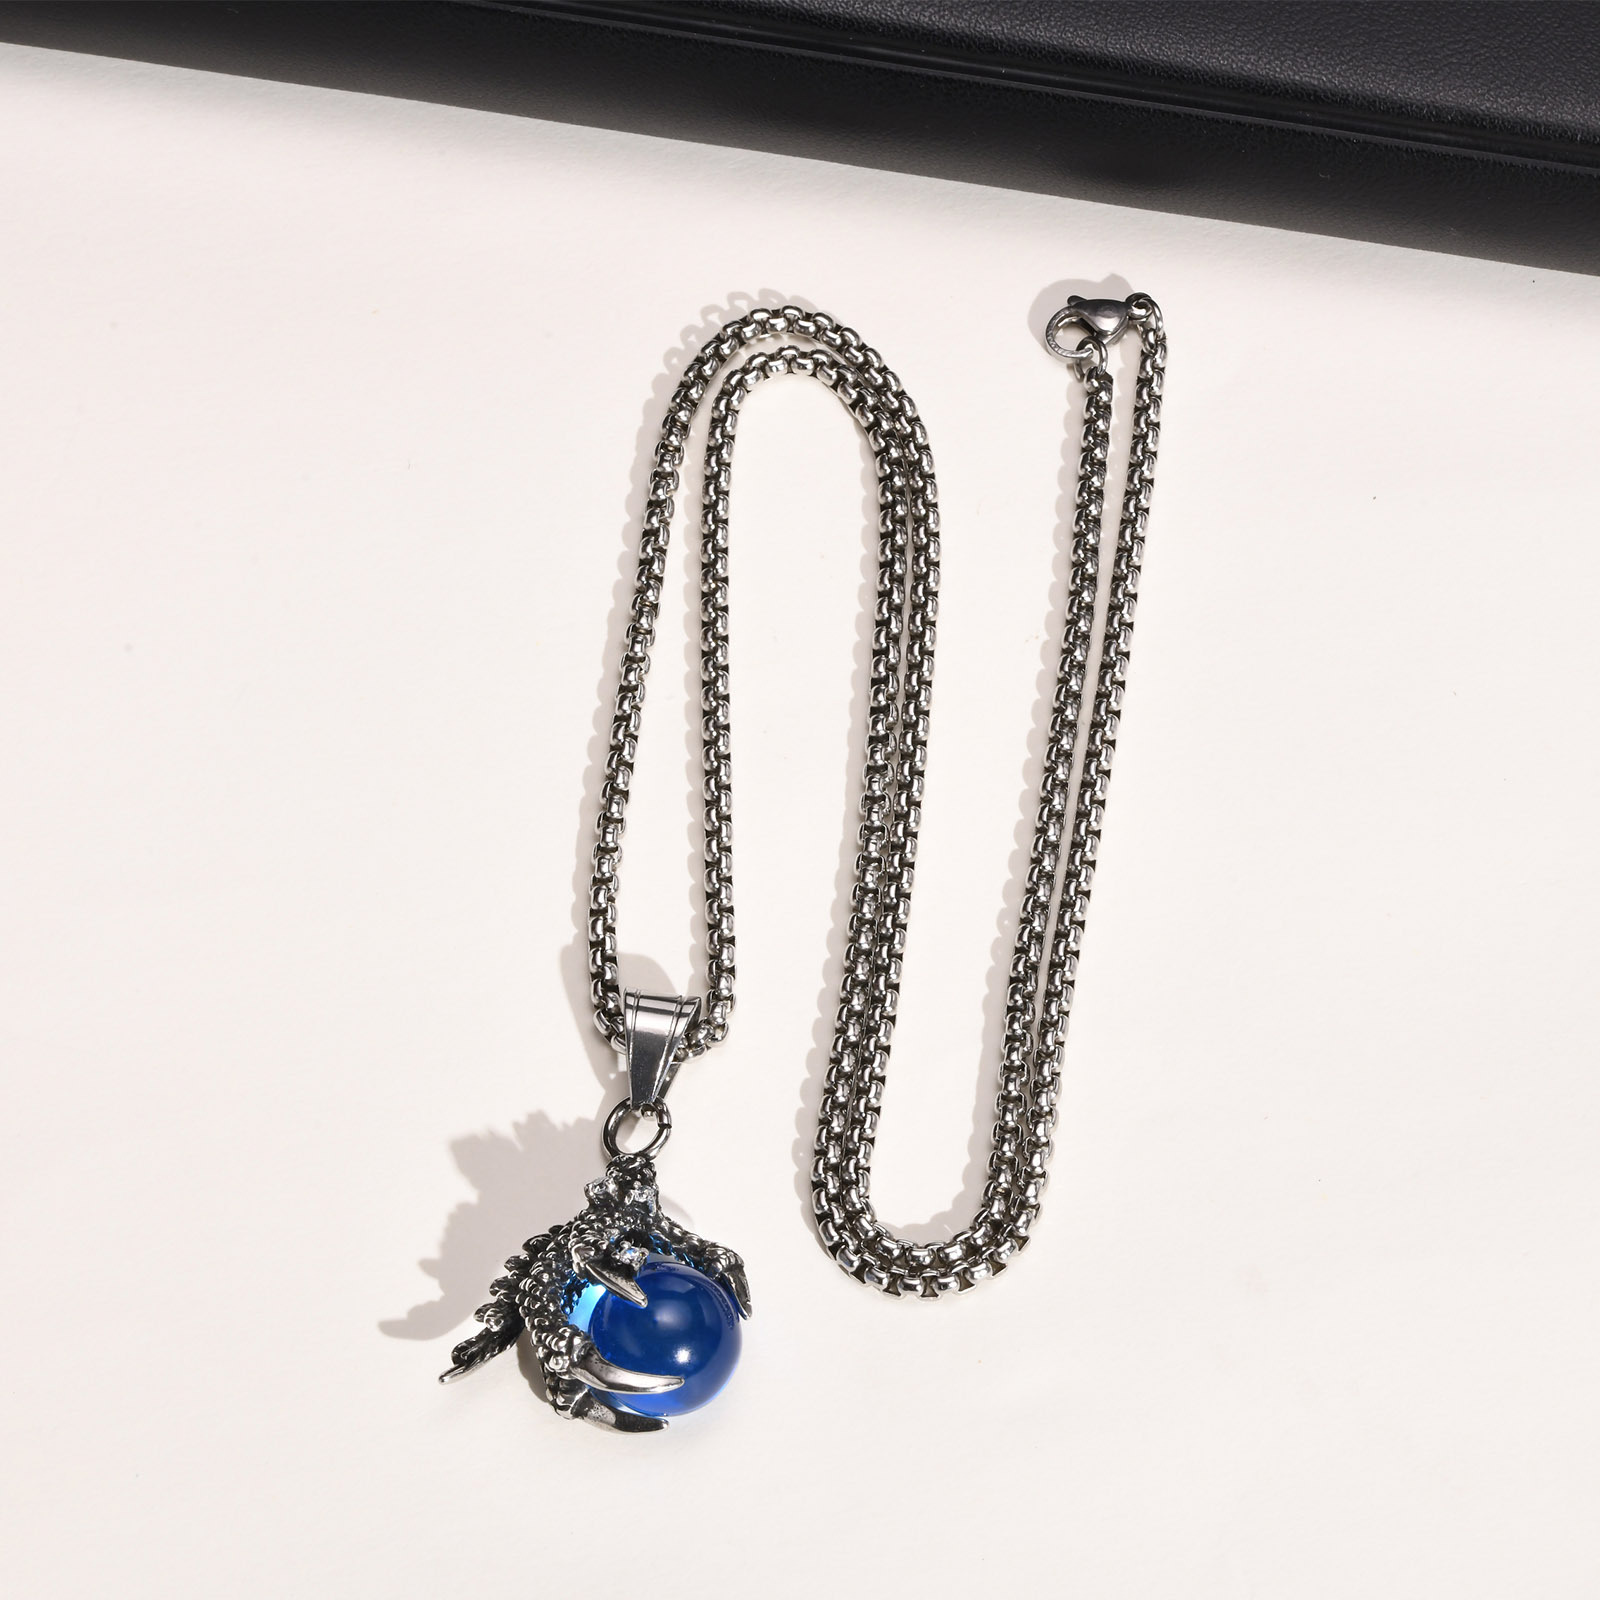 Blue beads   matching chain